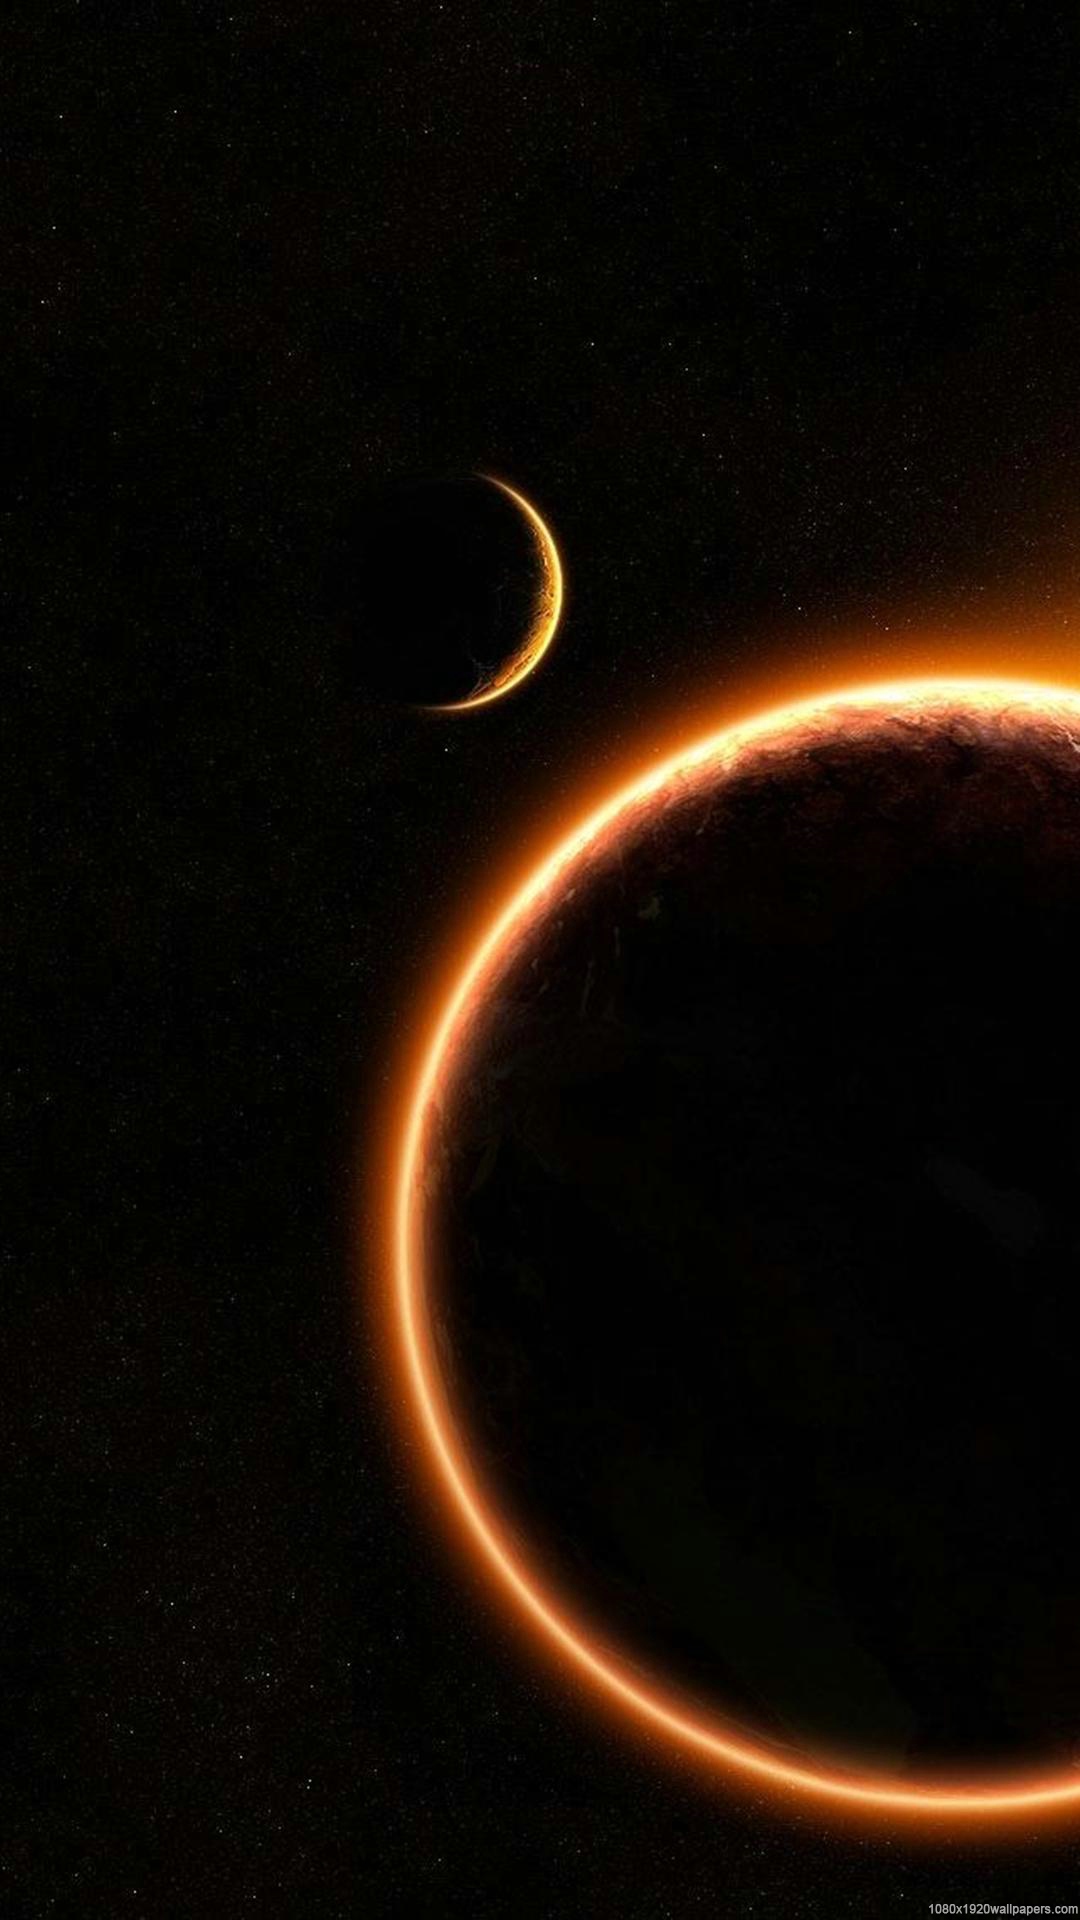 eclipse fondo de pantalla para iphone,creciente,atmósfera,objeto astronómico,espacio exterior,eclipse